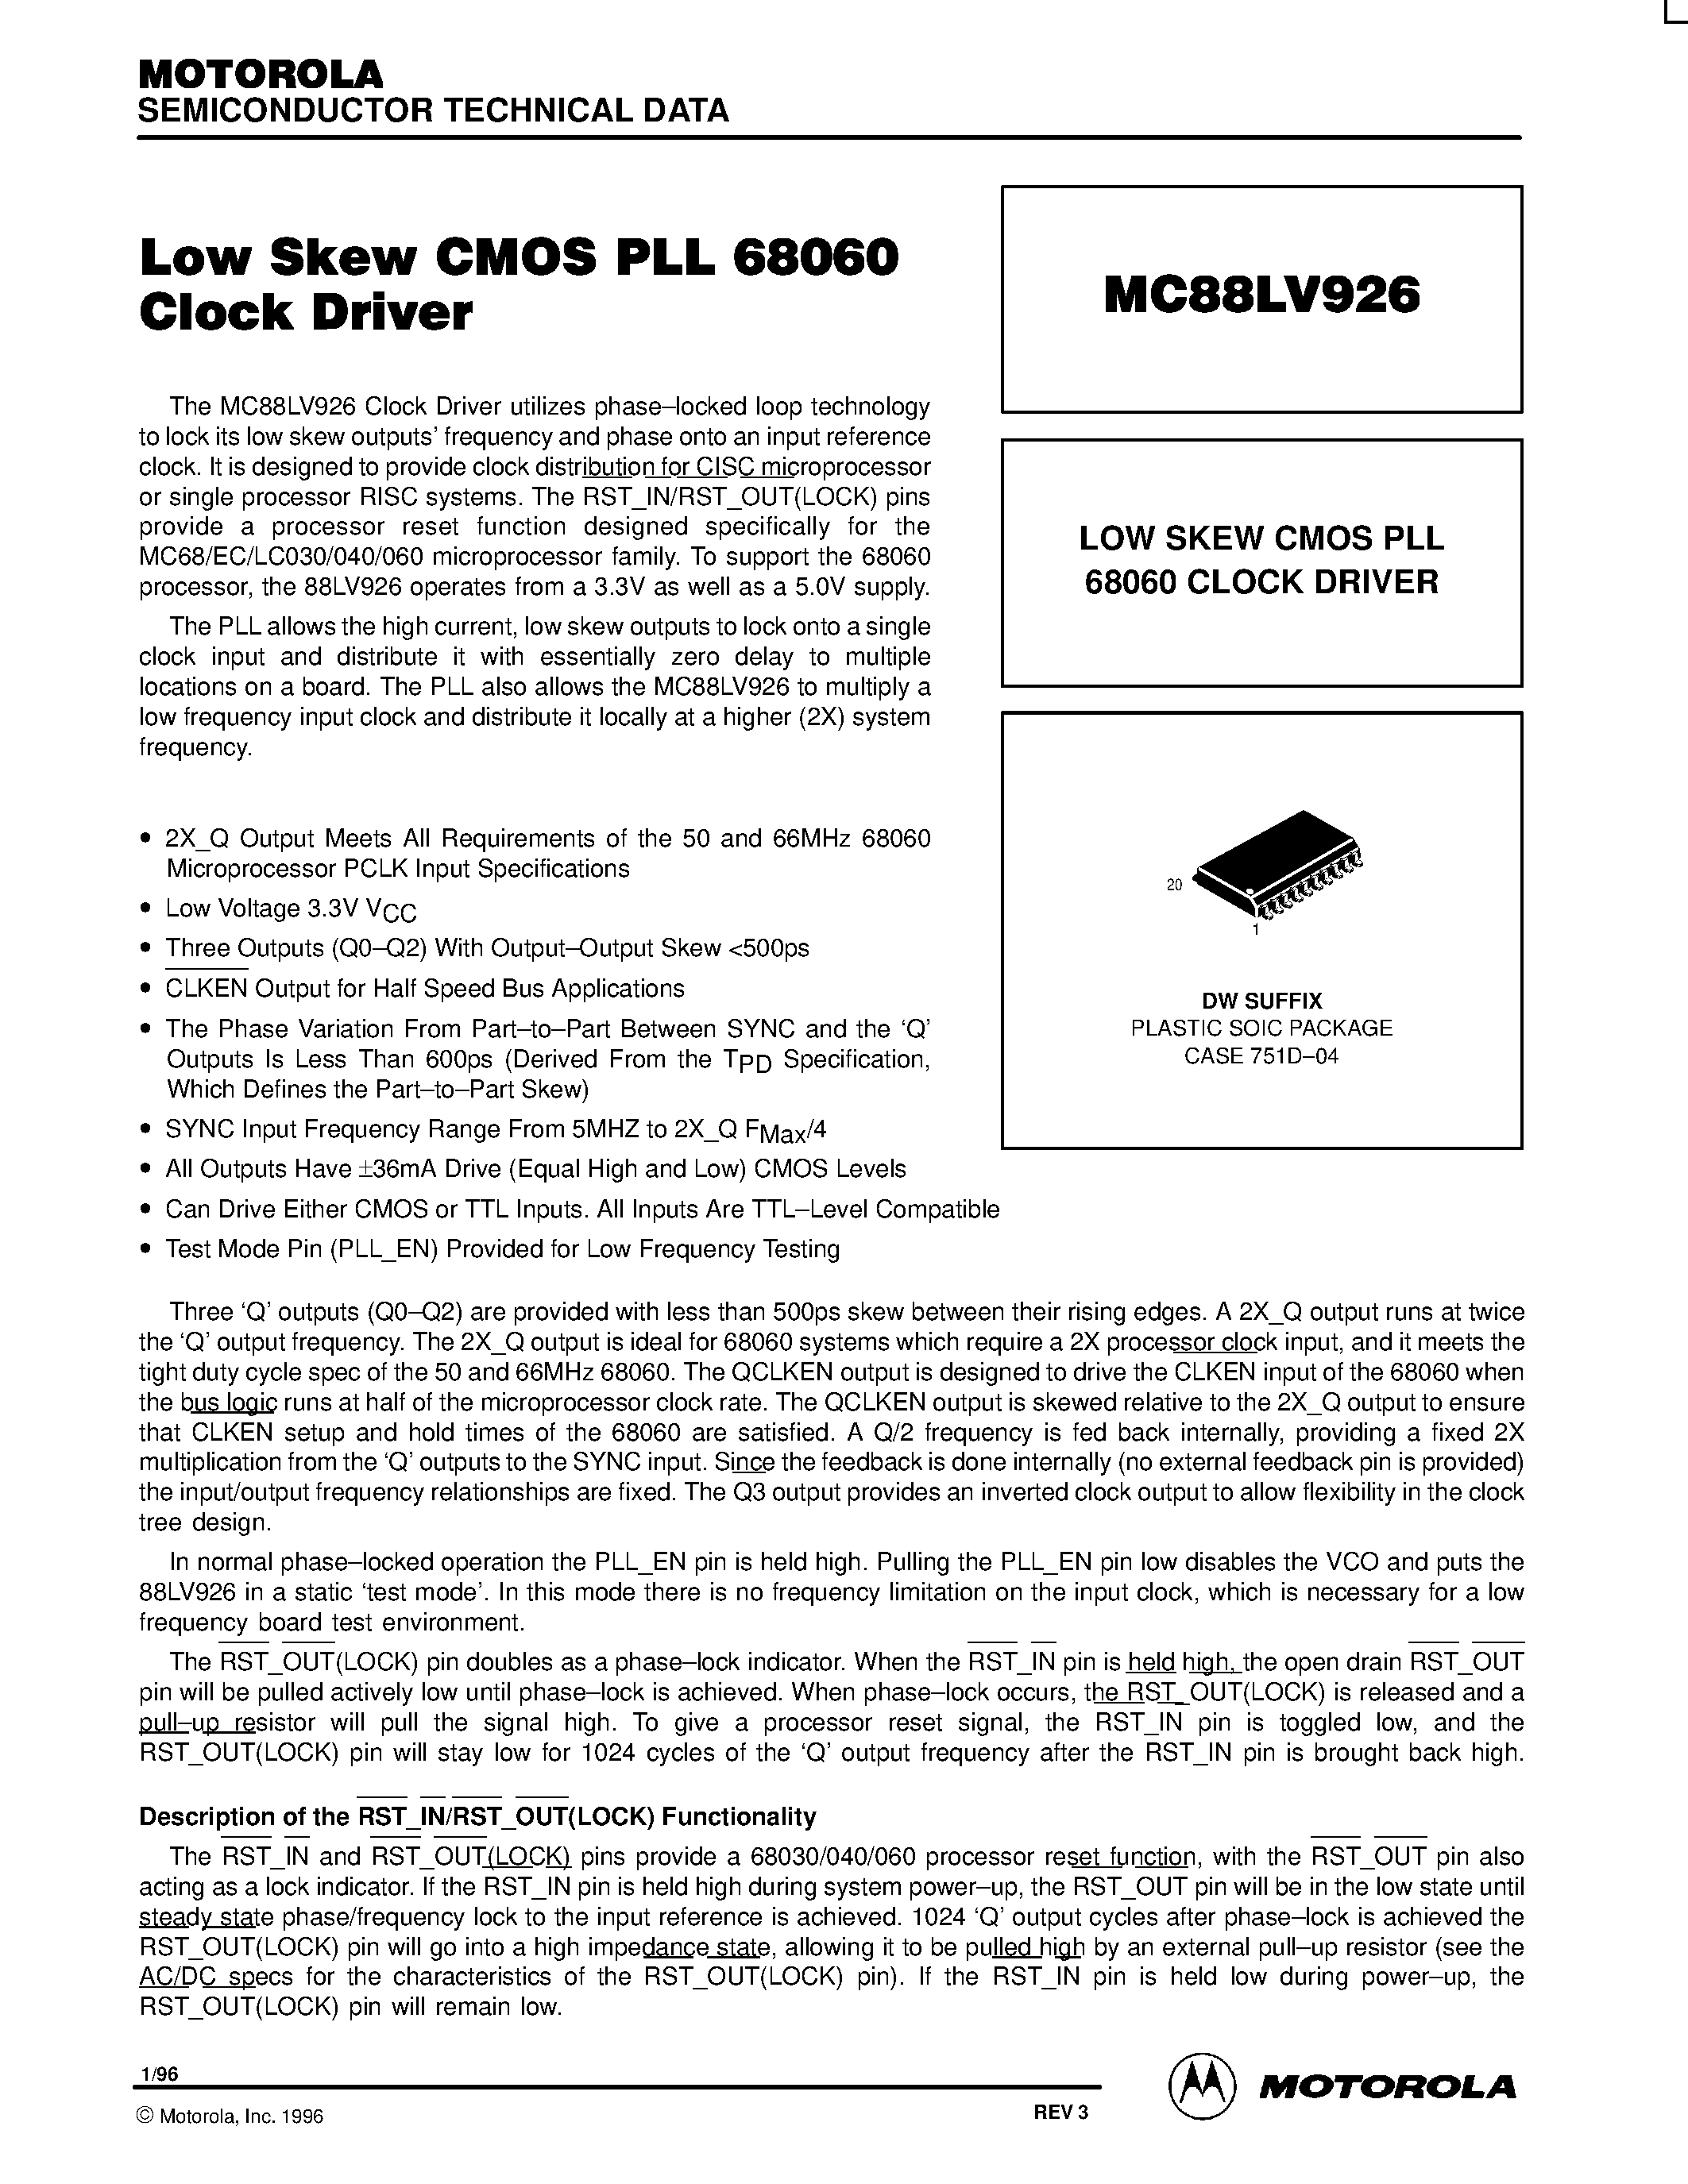 Datasheet MC88LV926DW - LOW SKEW CMOS PLL 68060 CLOCK DRIVER page 1